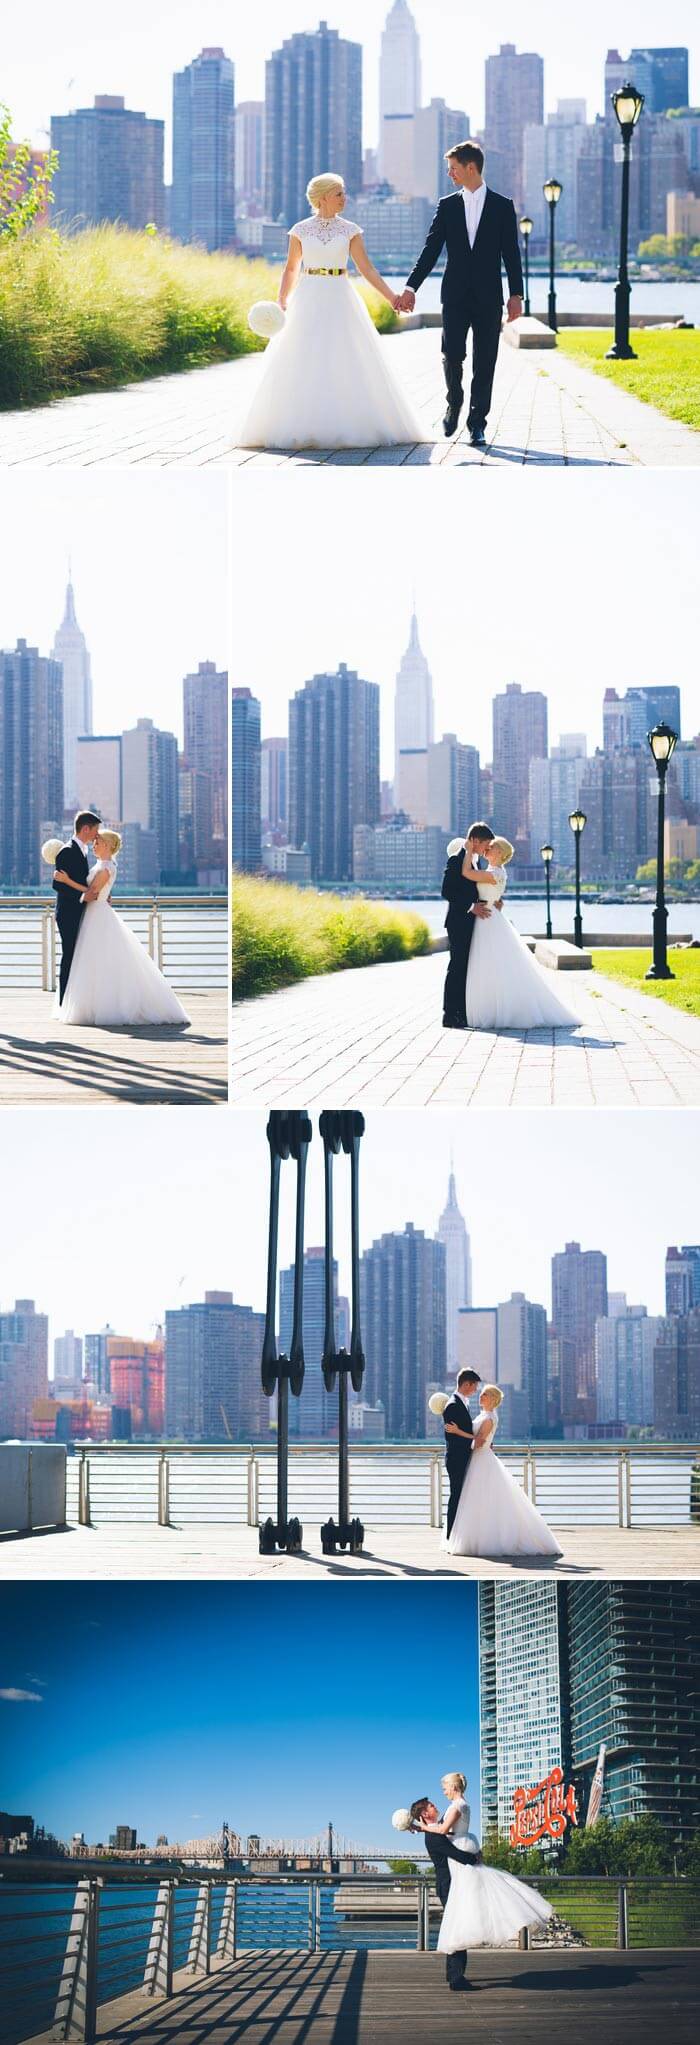 Heiraten in New York